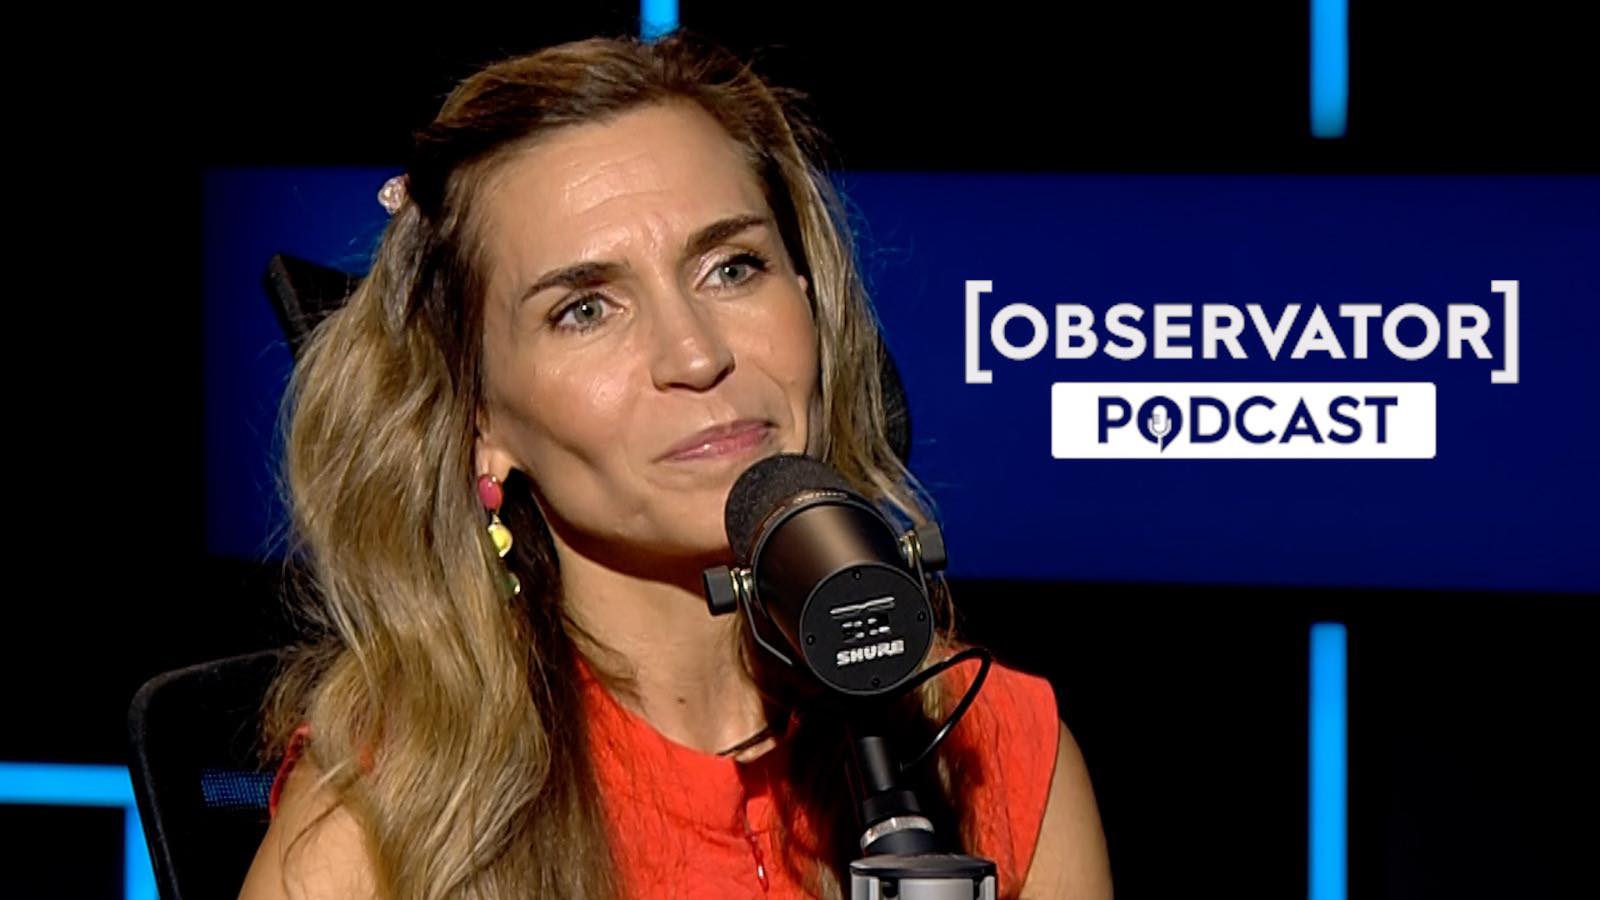 Podcast | Observator: Episodul 3 - Ioana Macoveiciuc (Prințesa Urbană)